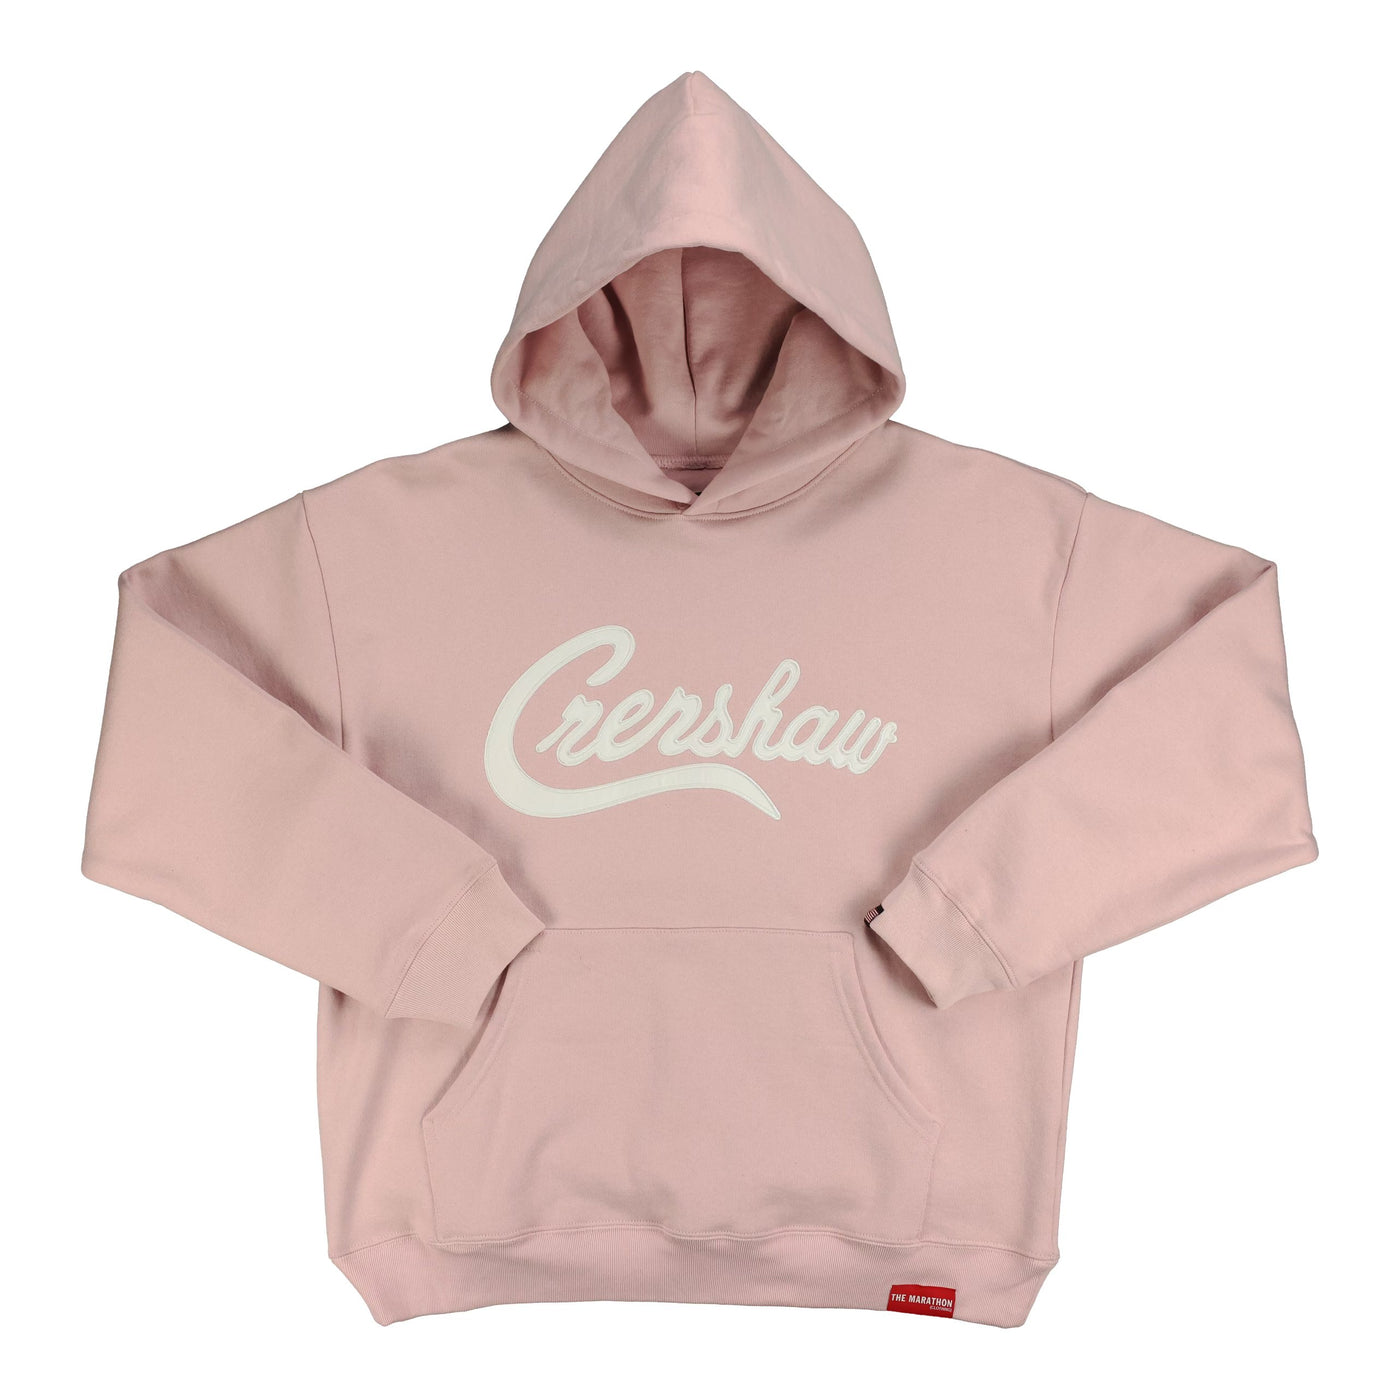 Crenshaw Hoodie - Pink/White